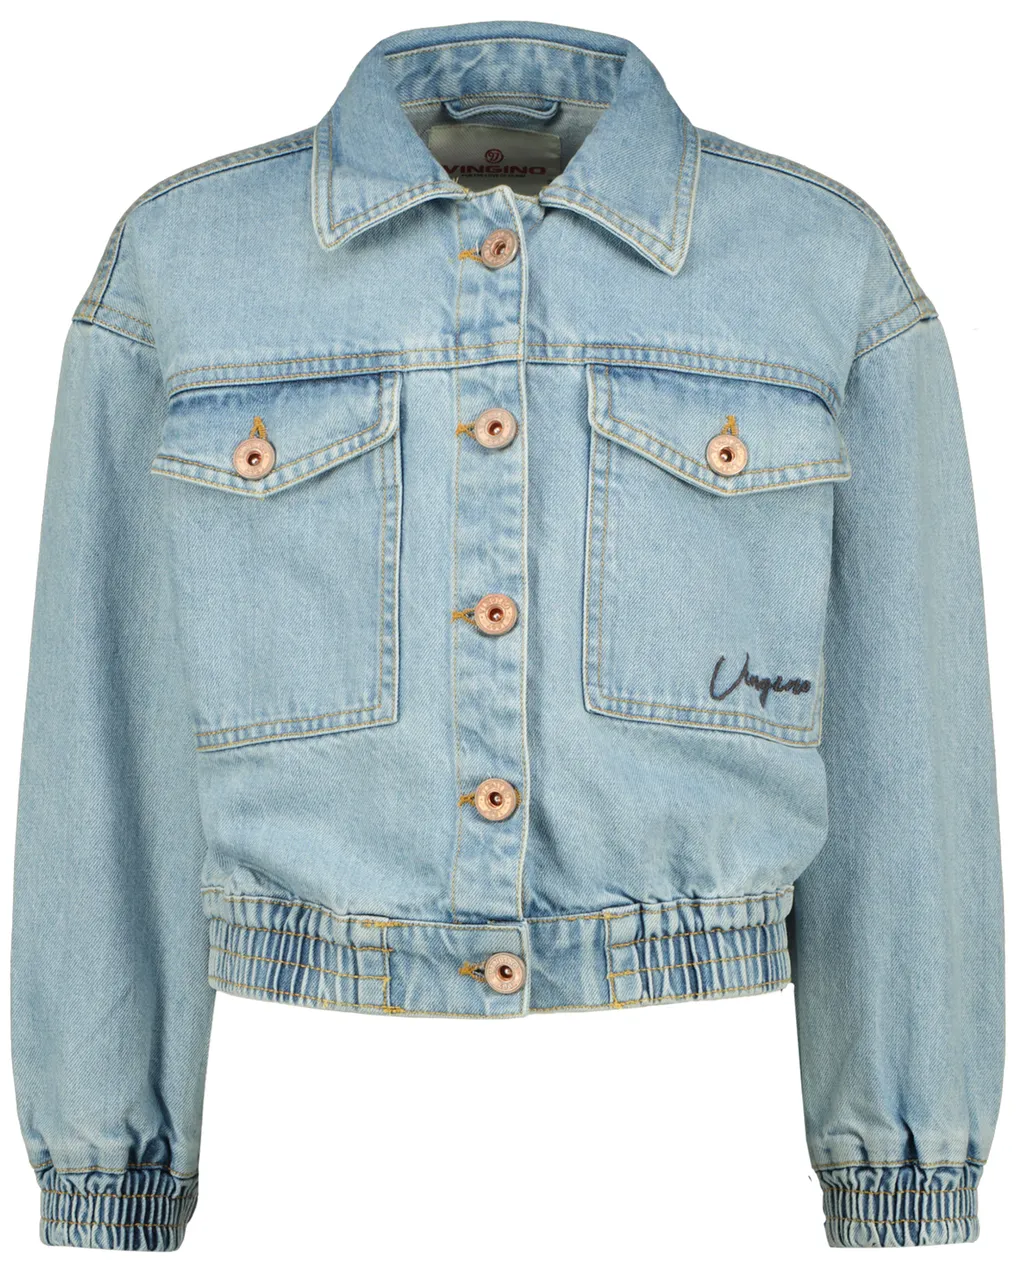 Jeans-Jacke TANJA VINTAGE in light vintage